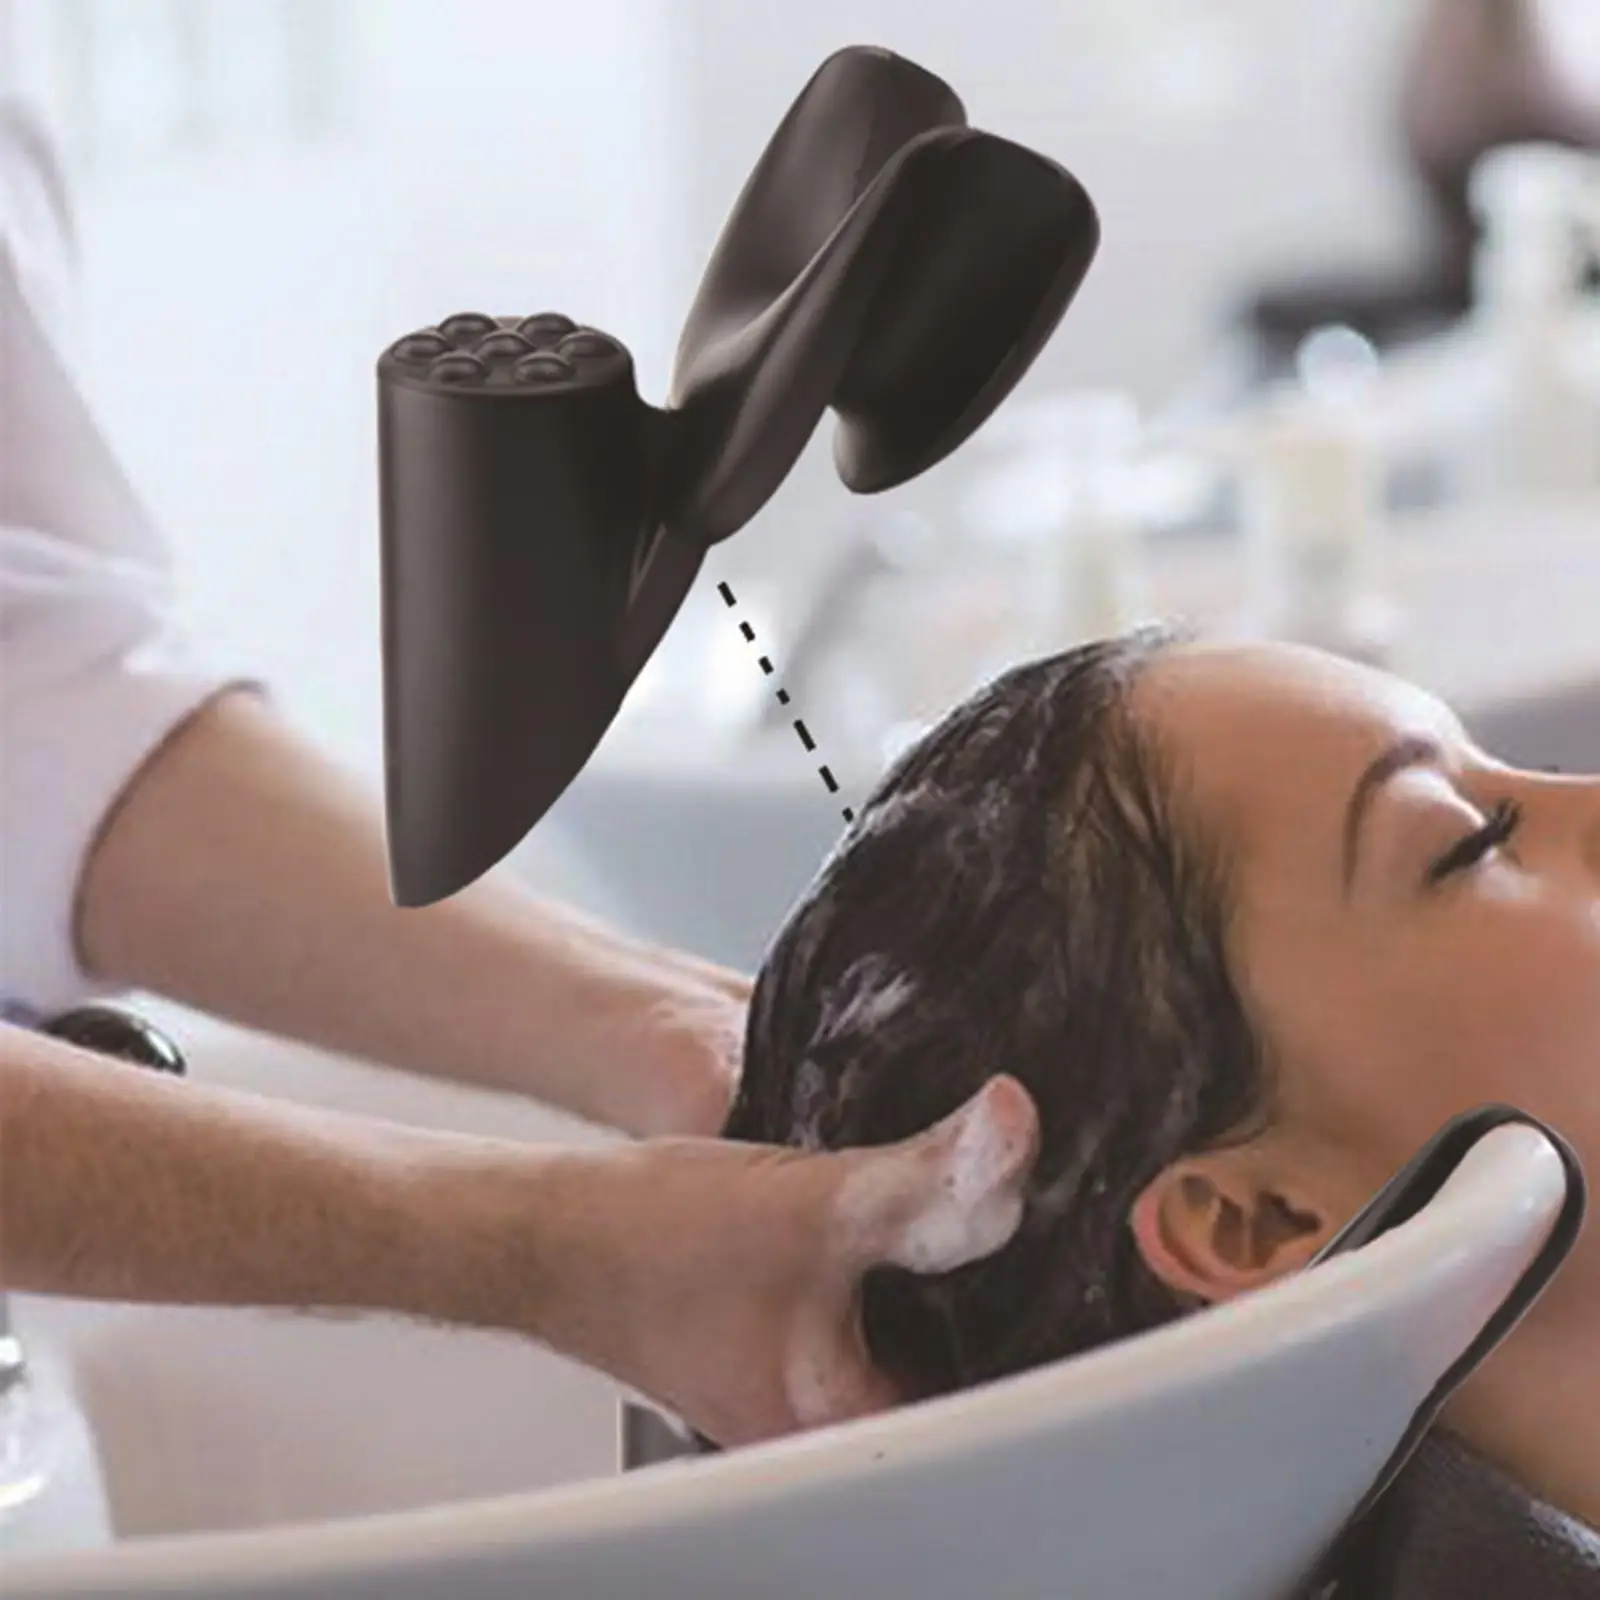 Durable Salon Sink Neck Cushion Shampoo Bowl Neck  Hair Washing Sink Basin Tool Hair Washing  for Salon Accessories